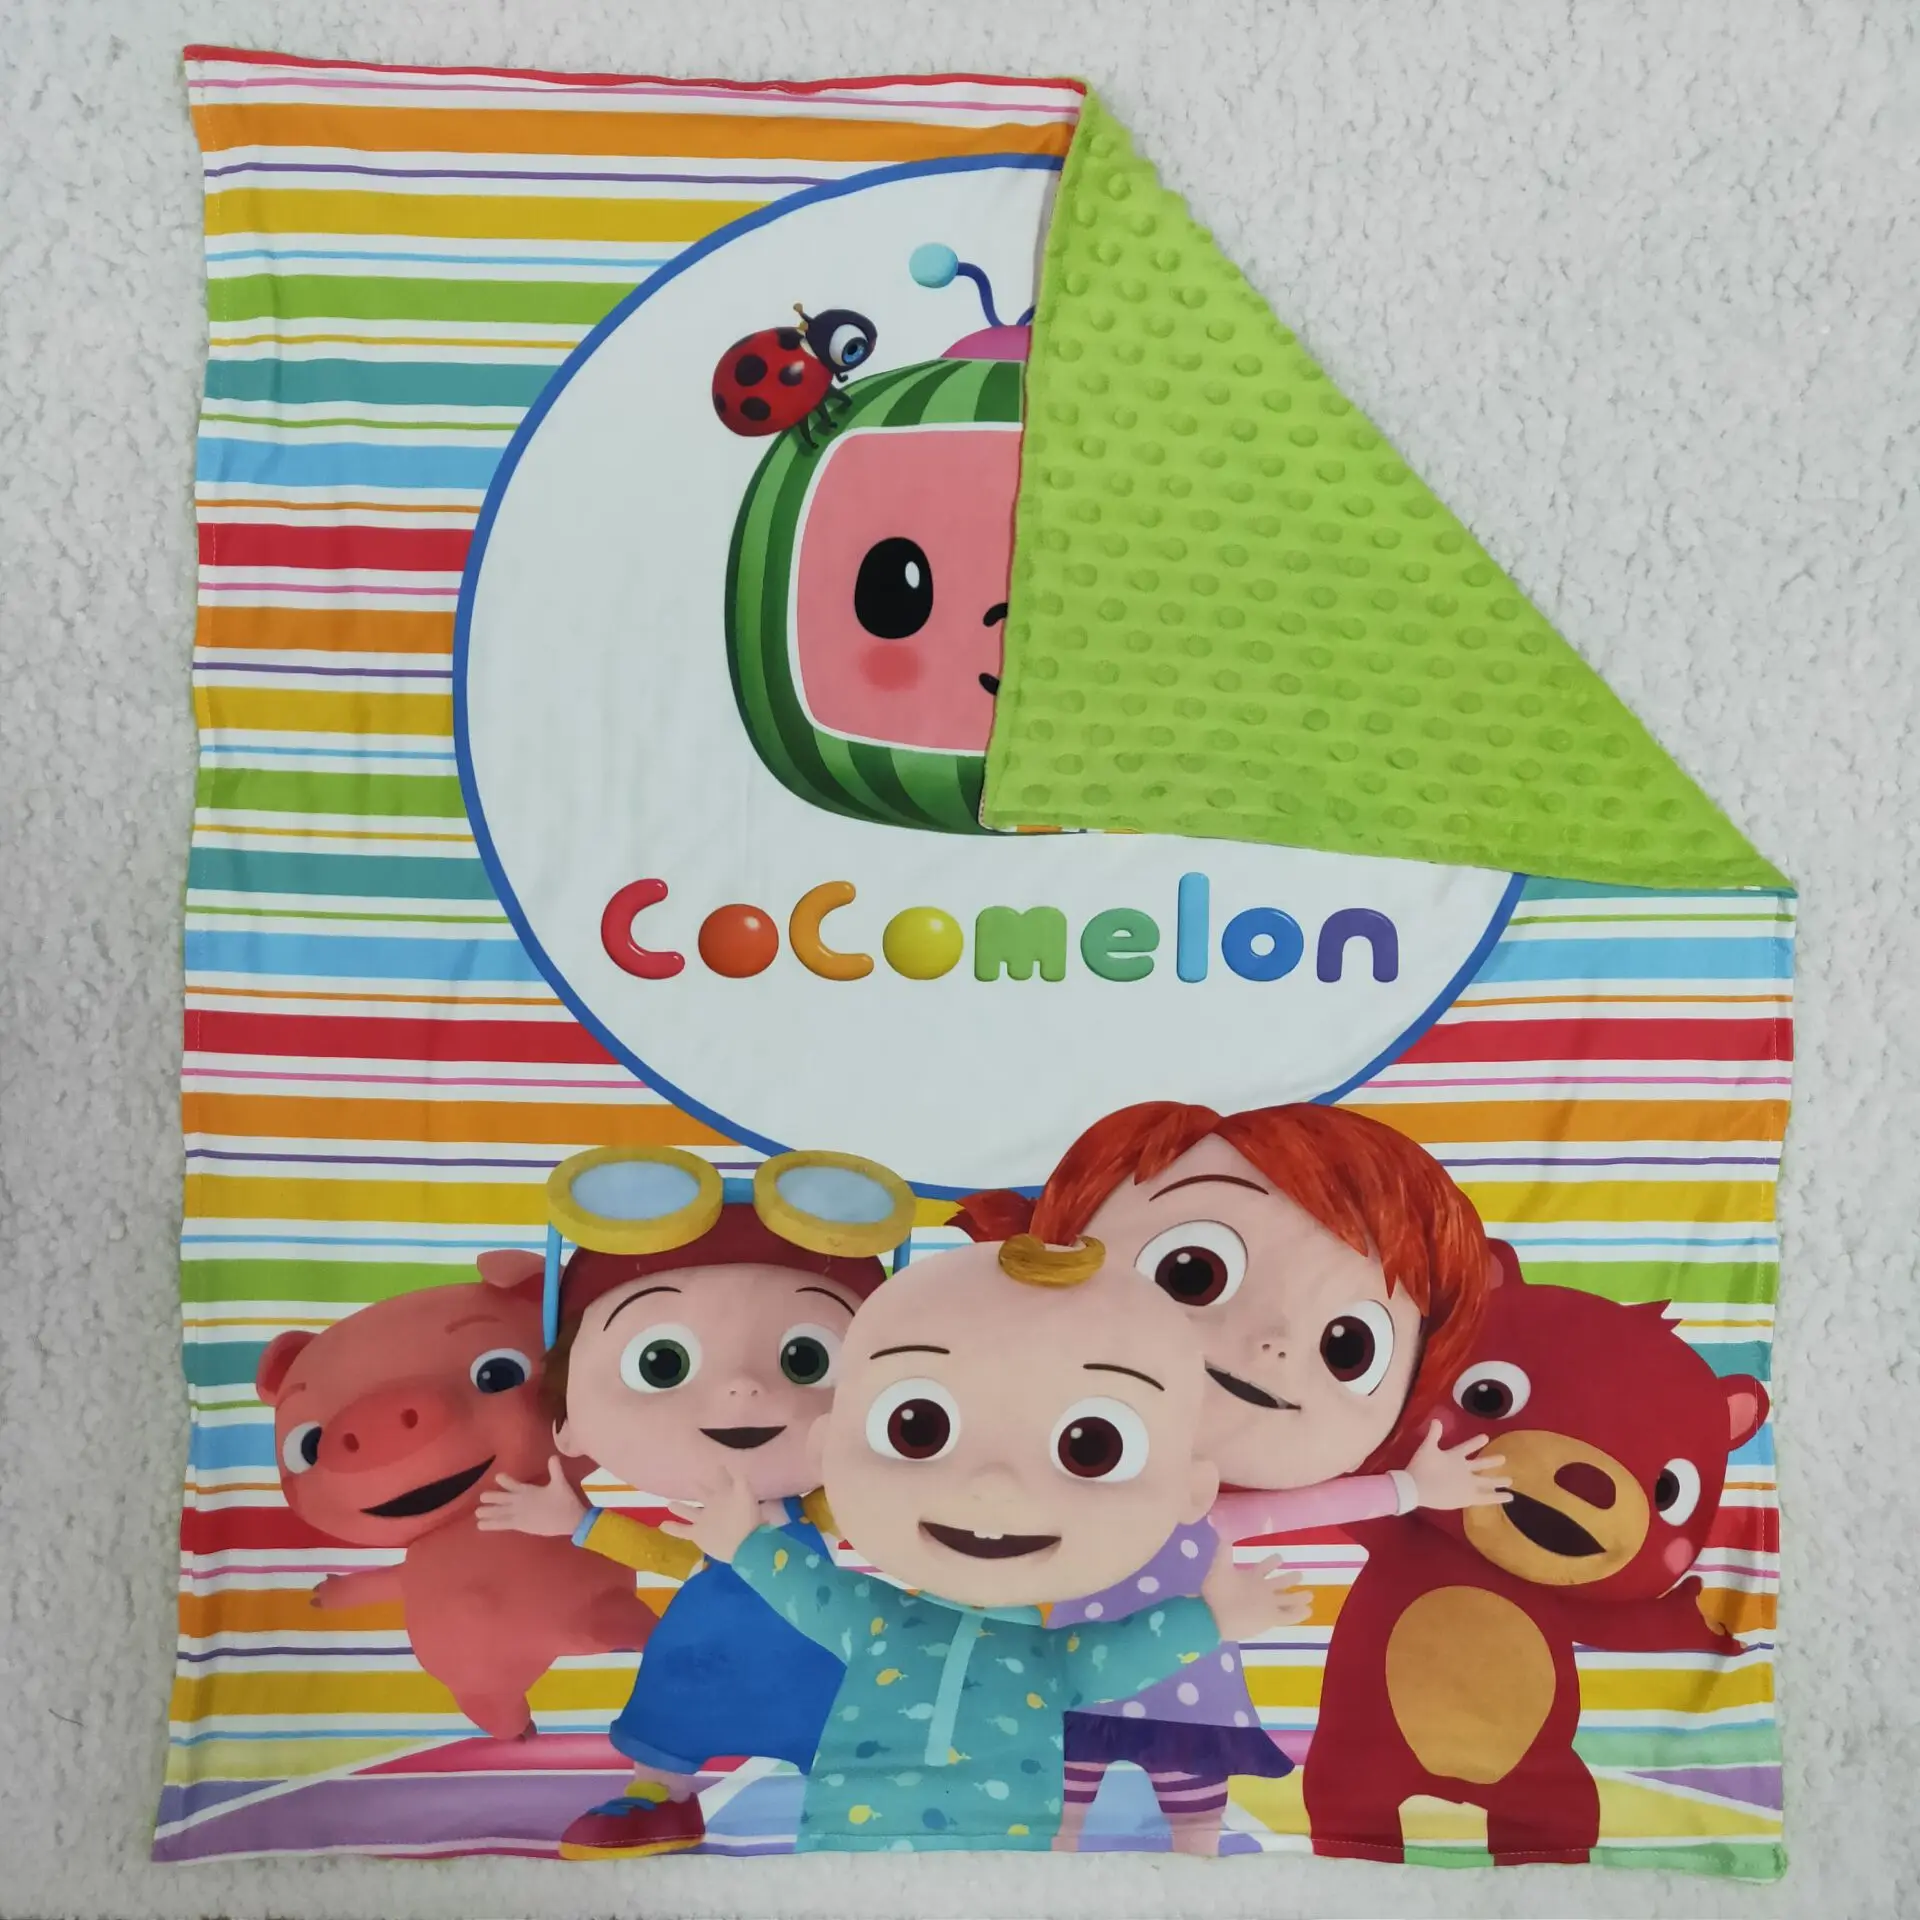 

Baby blankets popular cartoon coco melon printed stripe green blanket size 29x32 inch Toddlers sleepwear